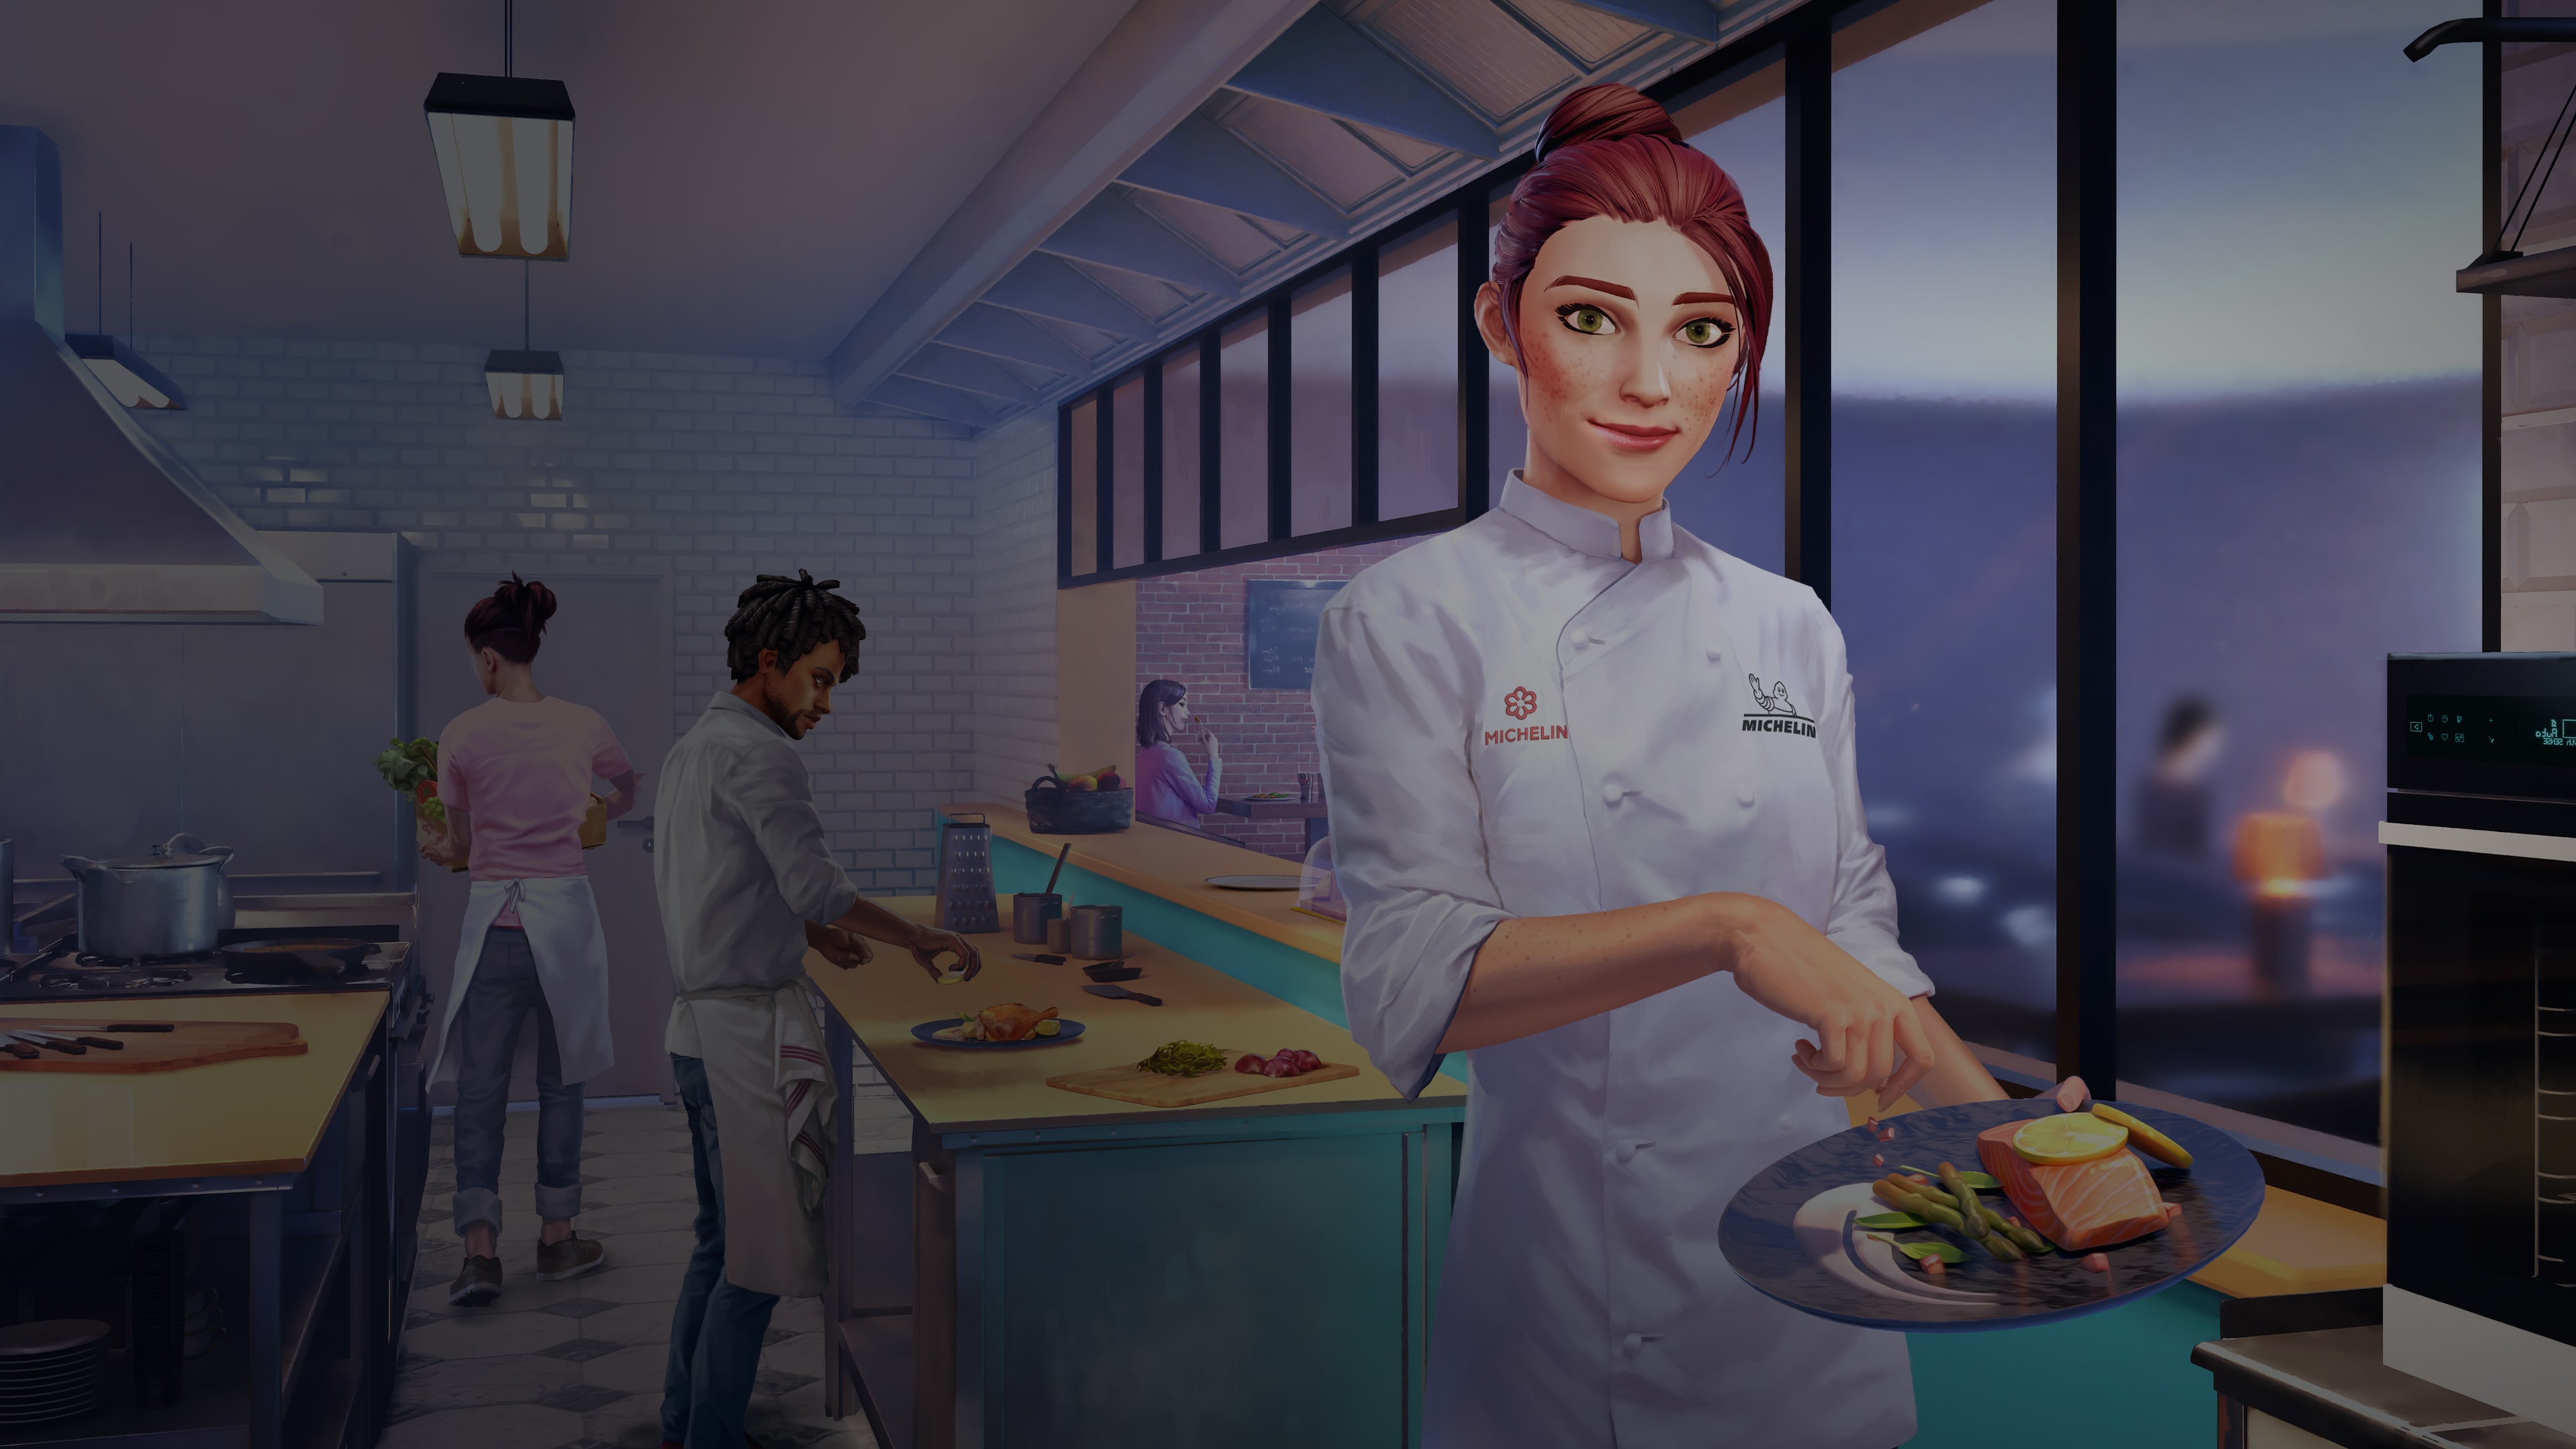 Chef Life - A Restaurant Simulator (日语, 韩语, 简体中文, 繁体中文, 英语)